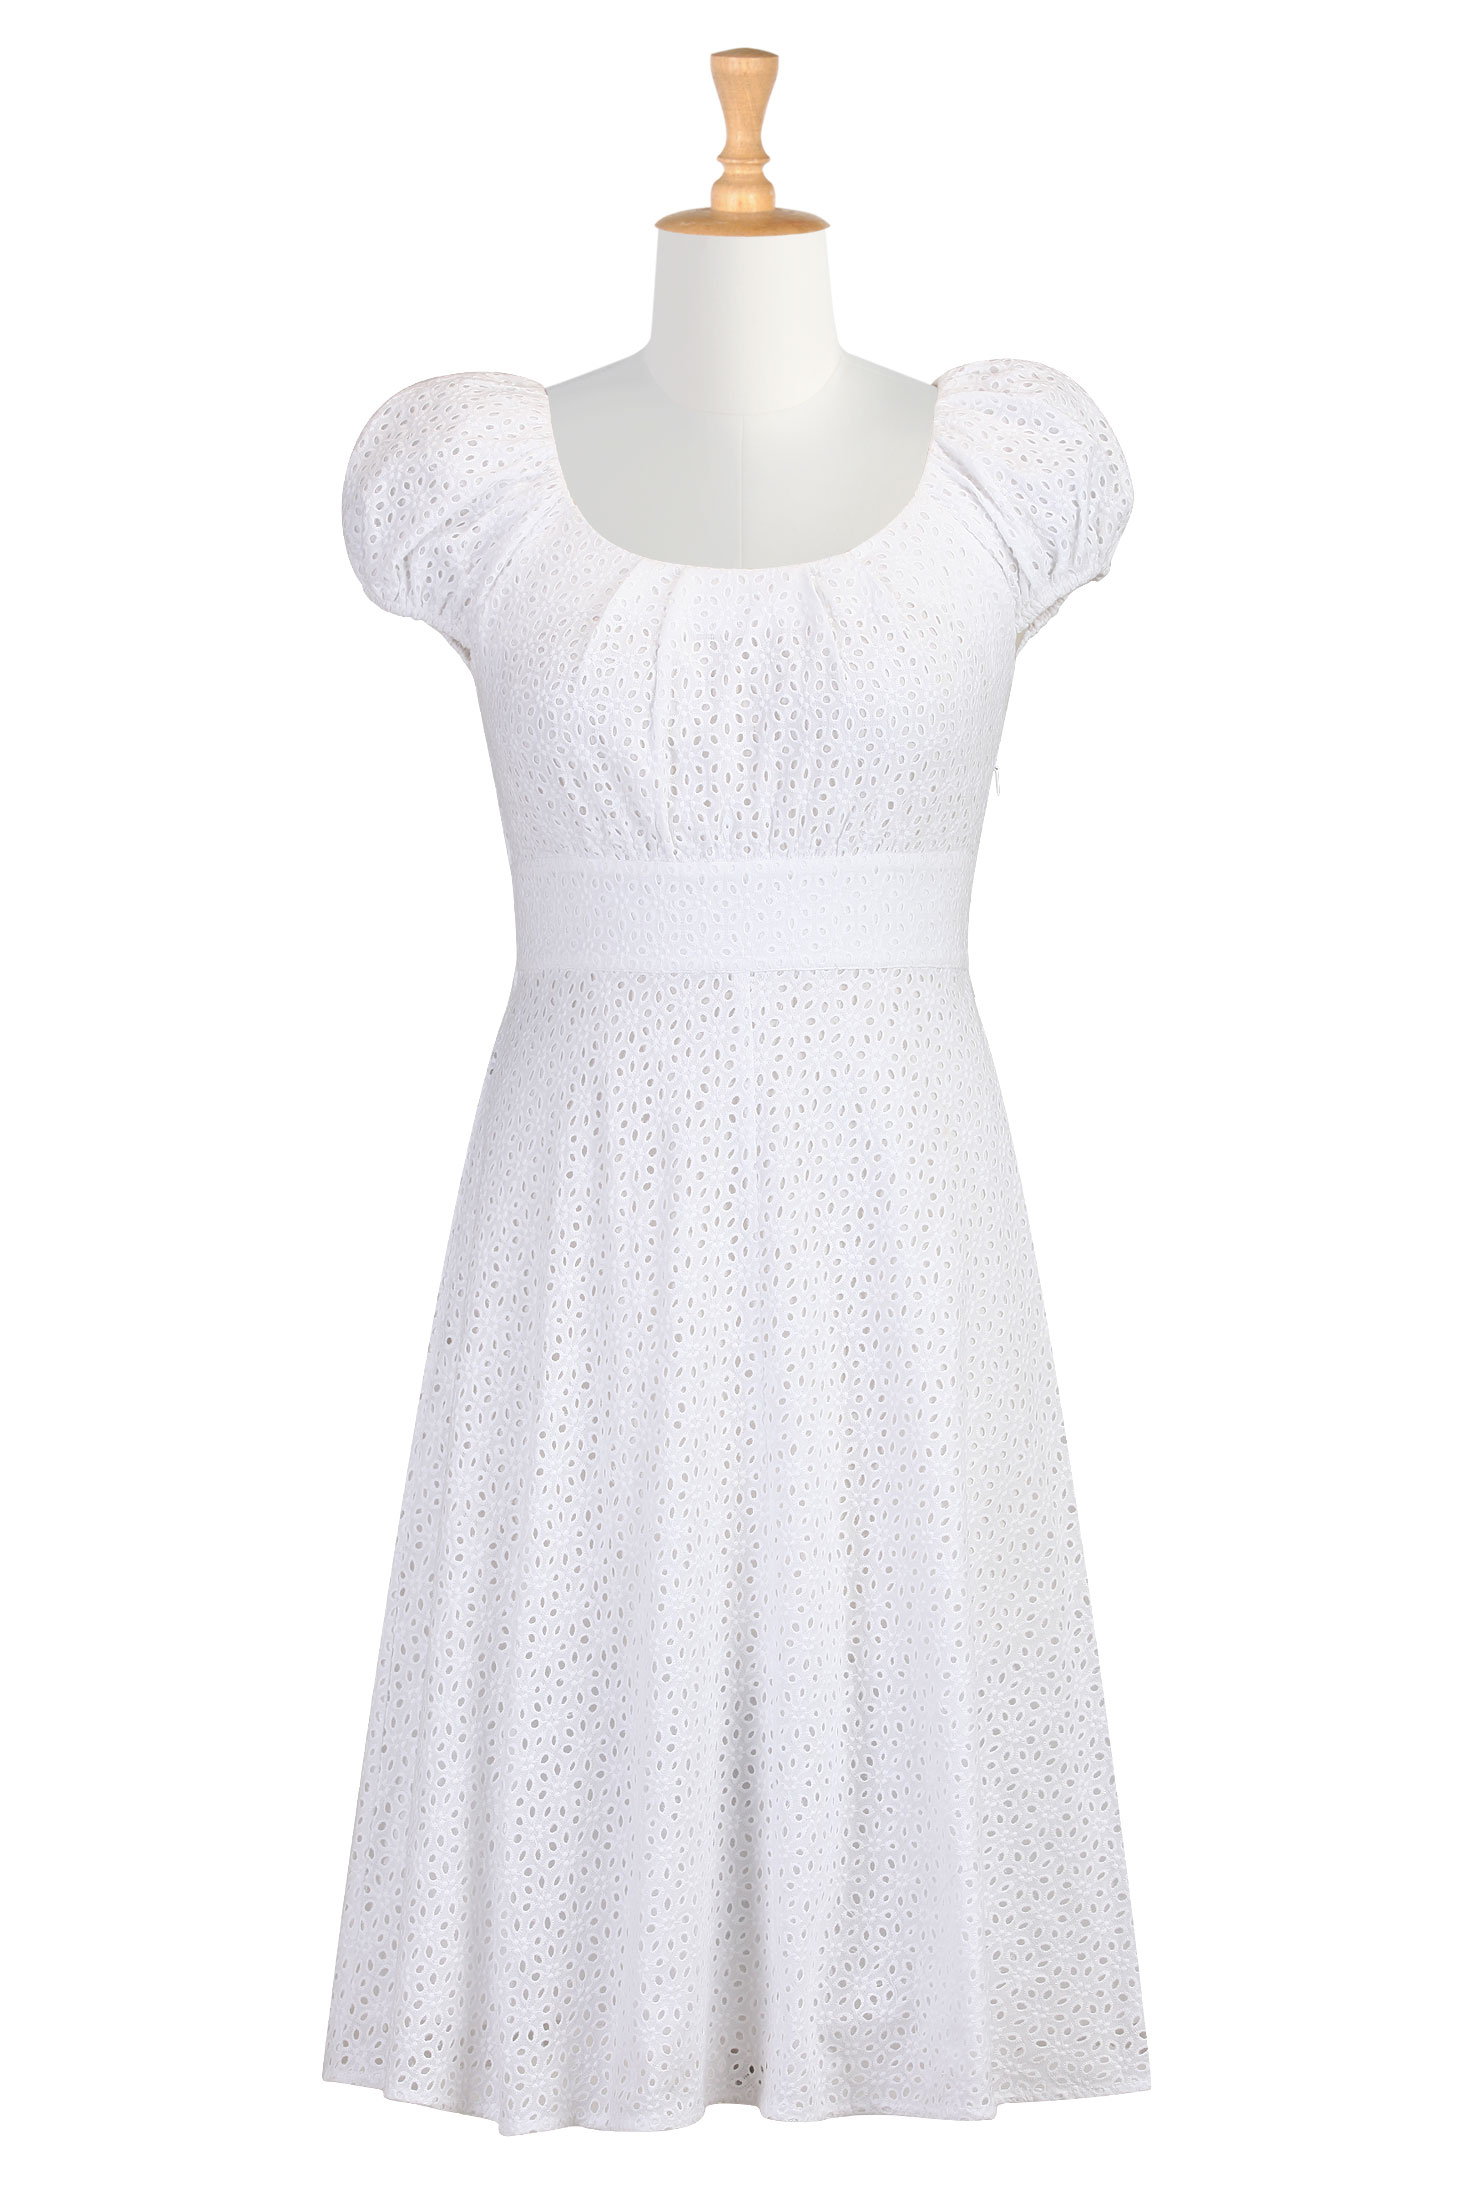 WHITE EYELET DRESS - Gunda Daras